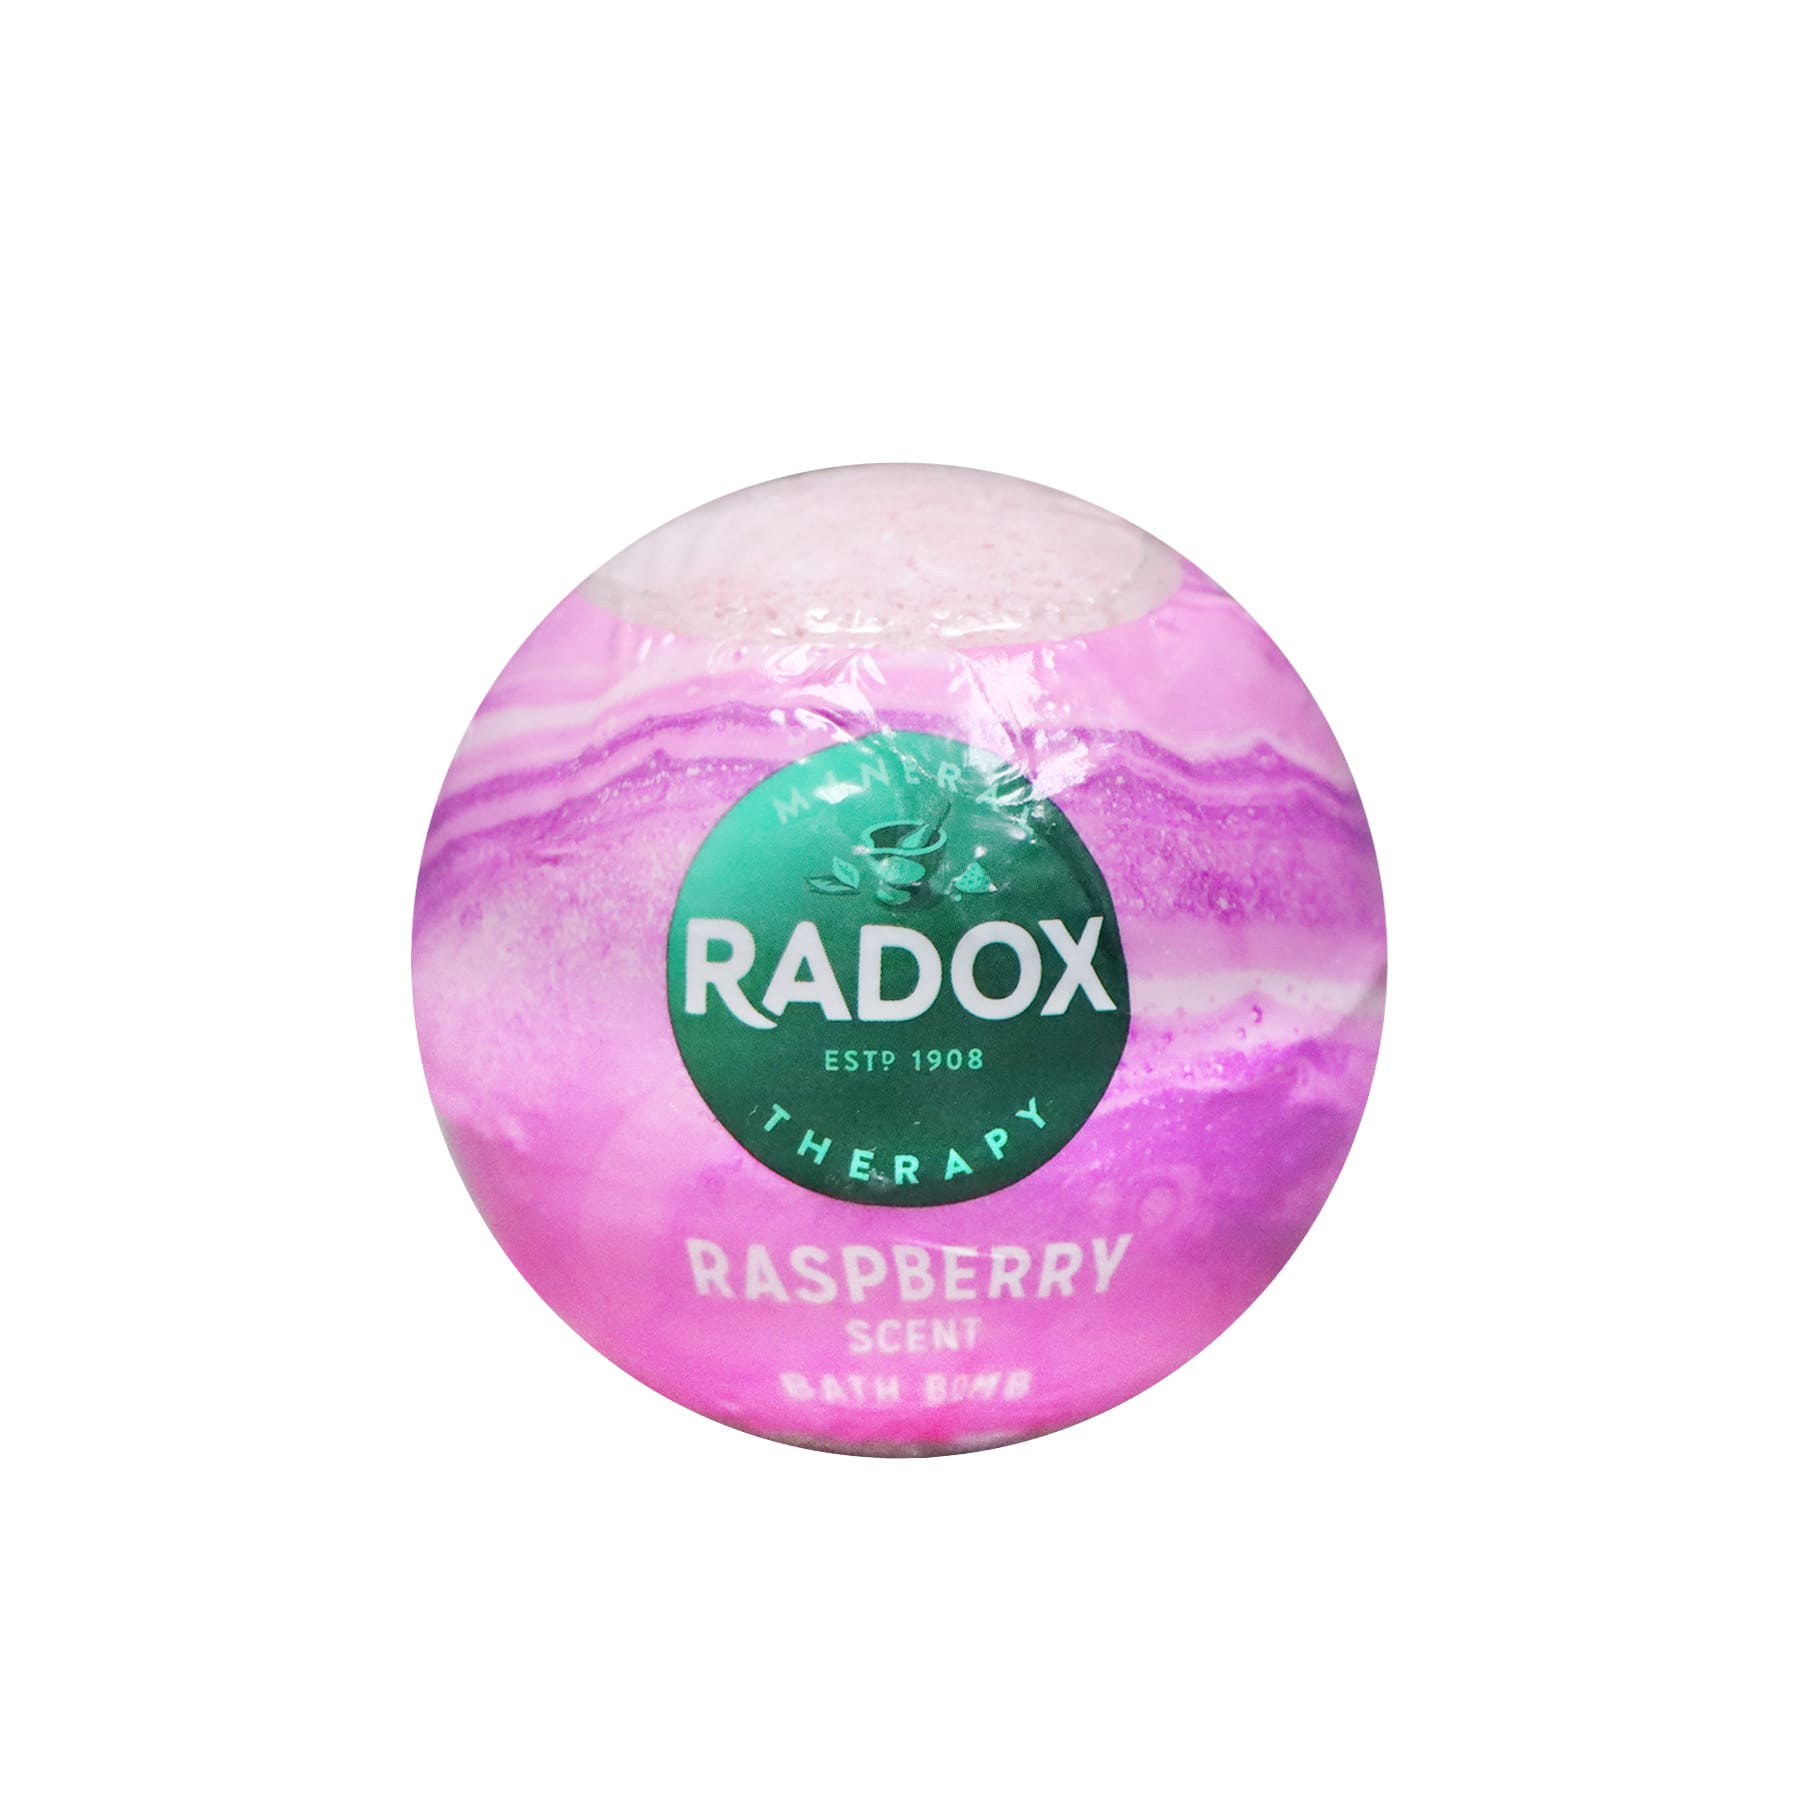 Radox Bath Bomb 100g (Raspberry)